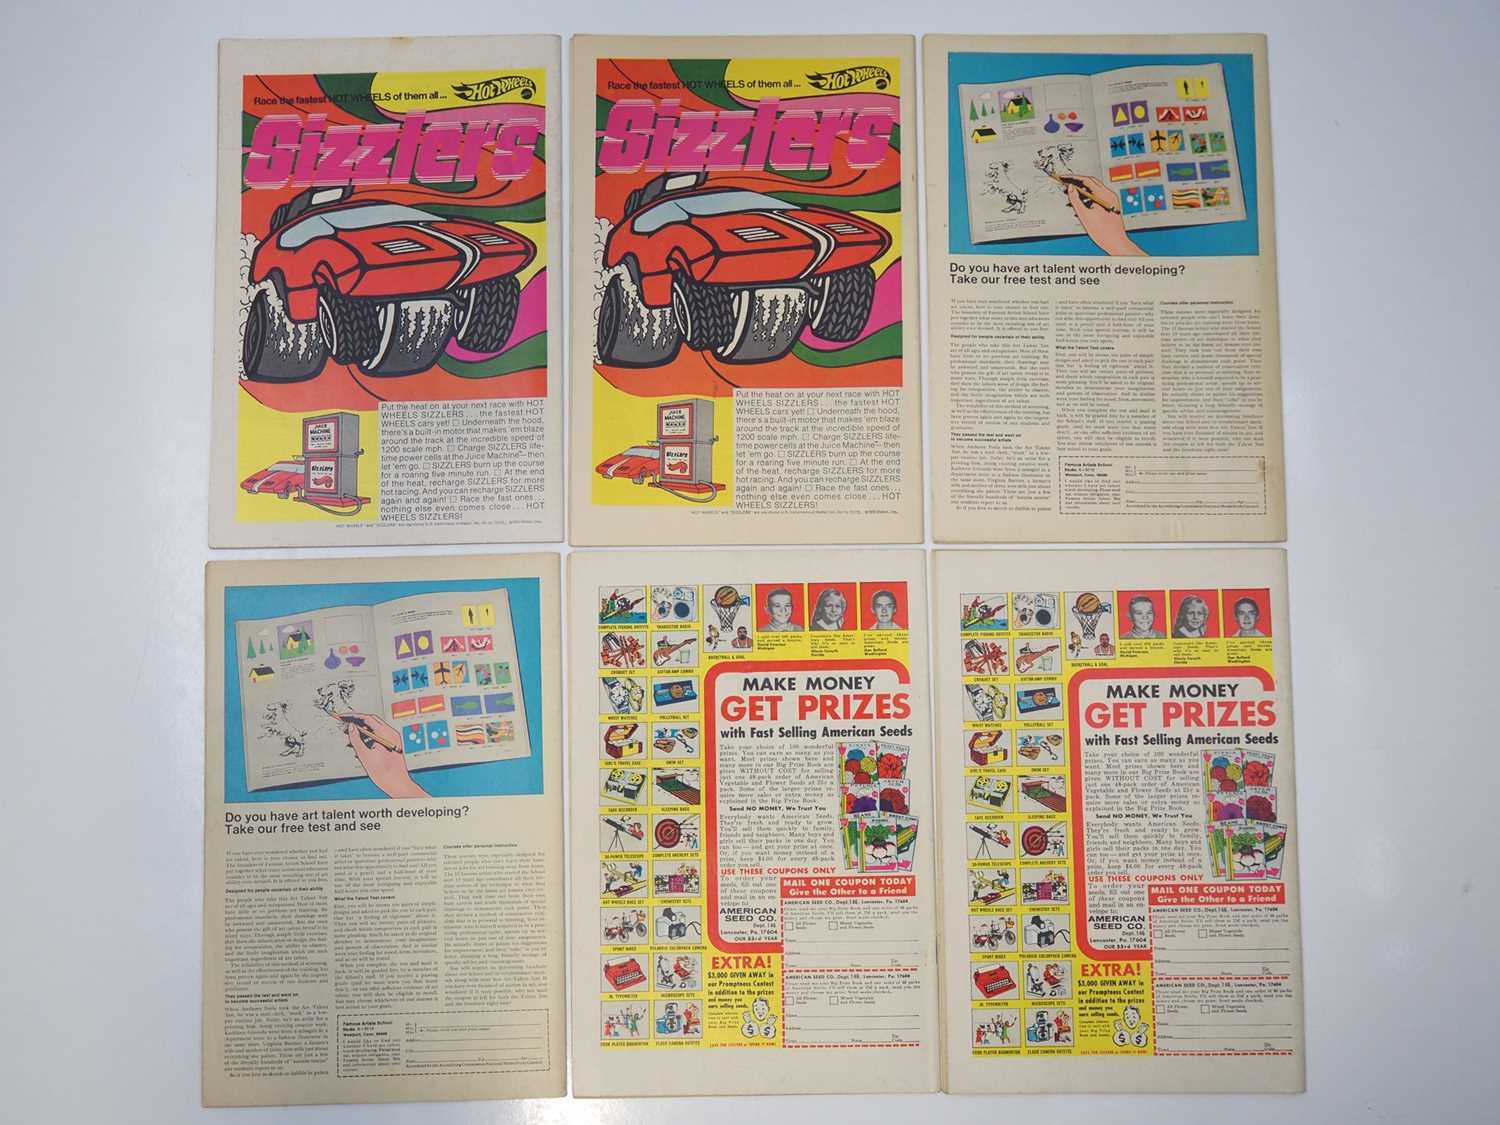 FANTASTIC FOUR #106, 107, 108, 109, 110, 111 (6 in Lot) - (1971 - MARVEL - UK Price Variant) - - Image 2 of 2